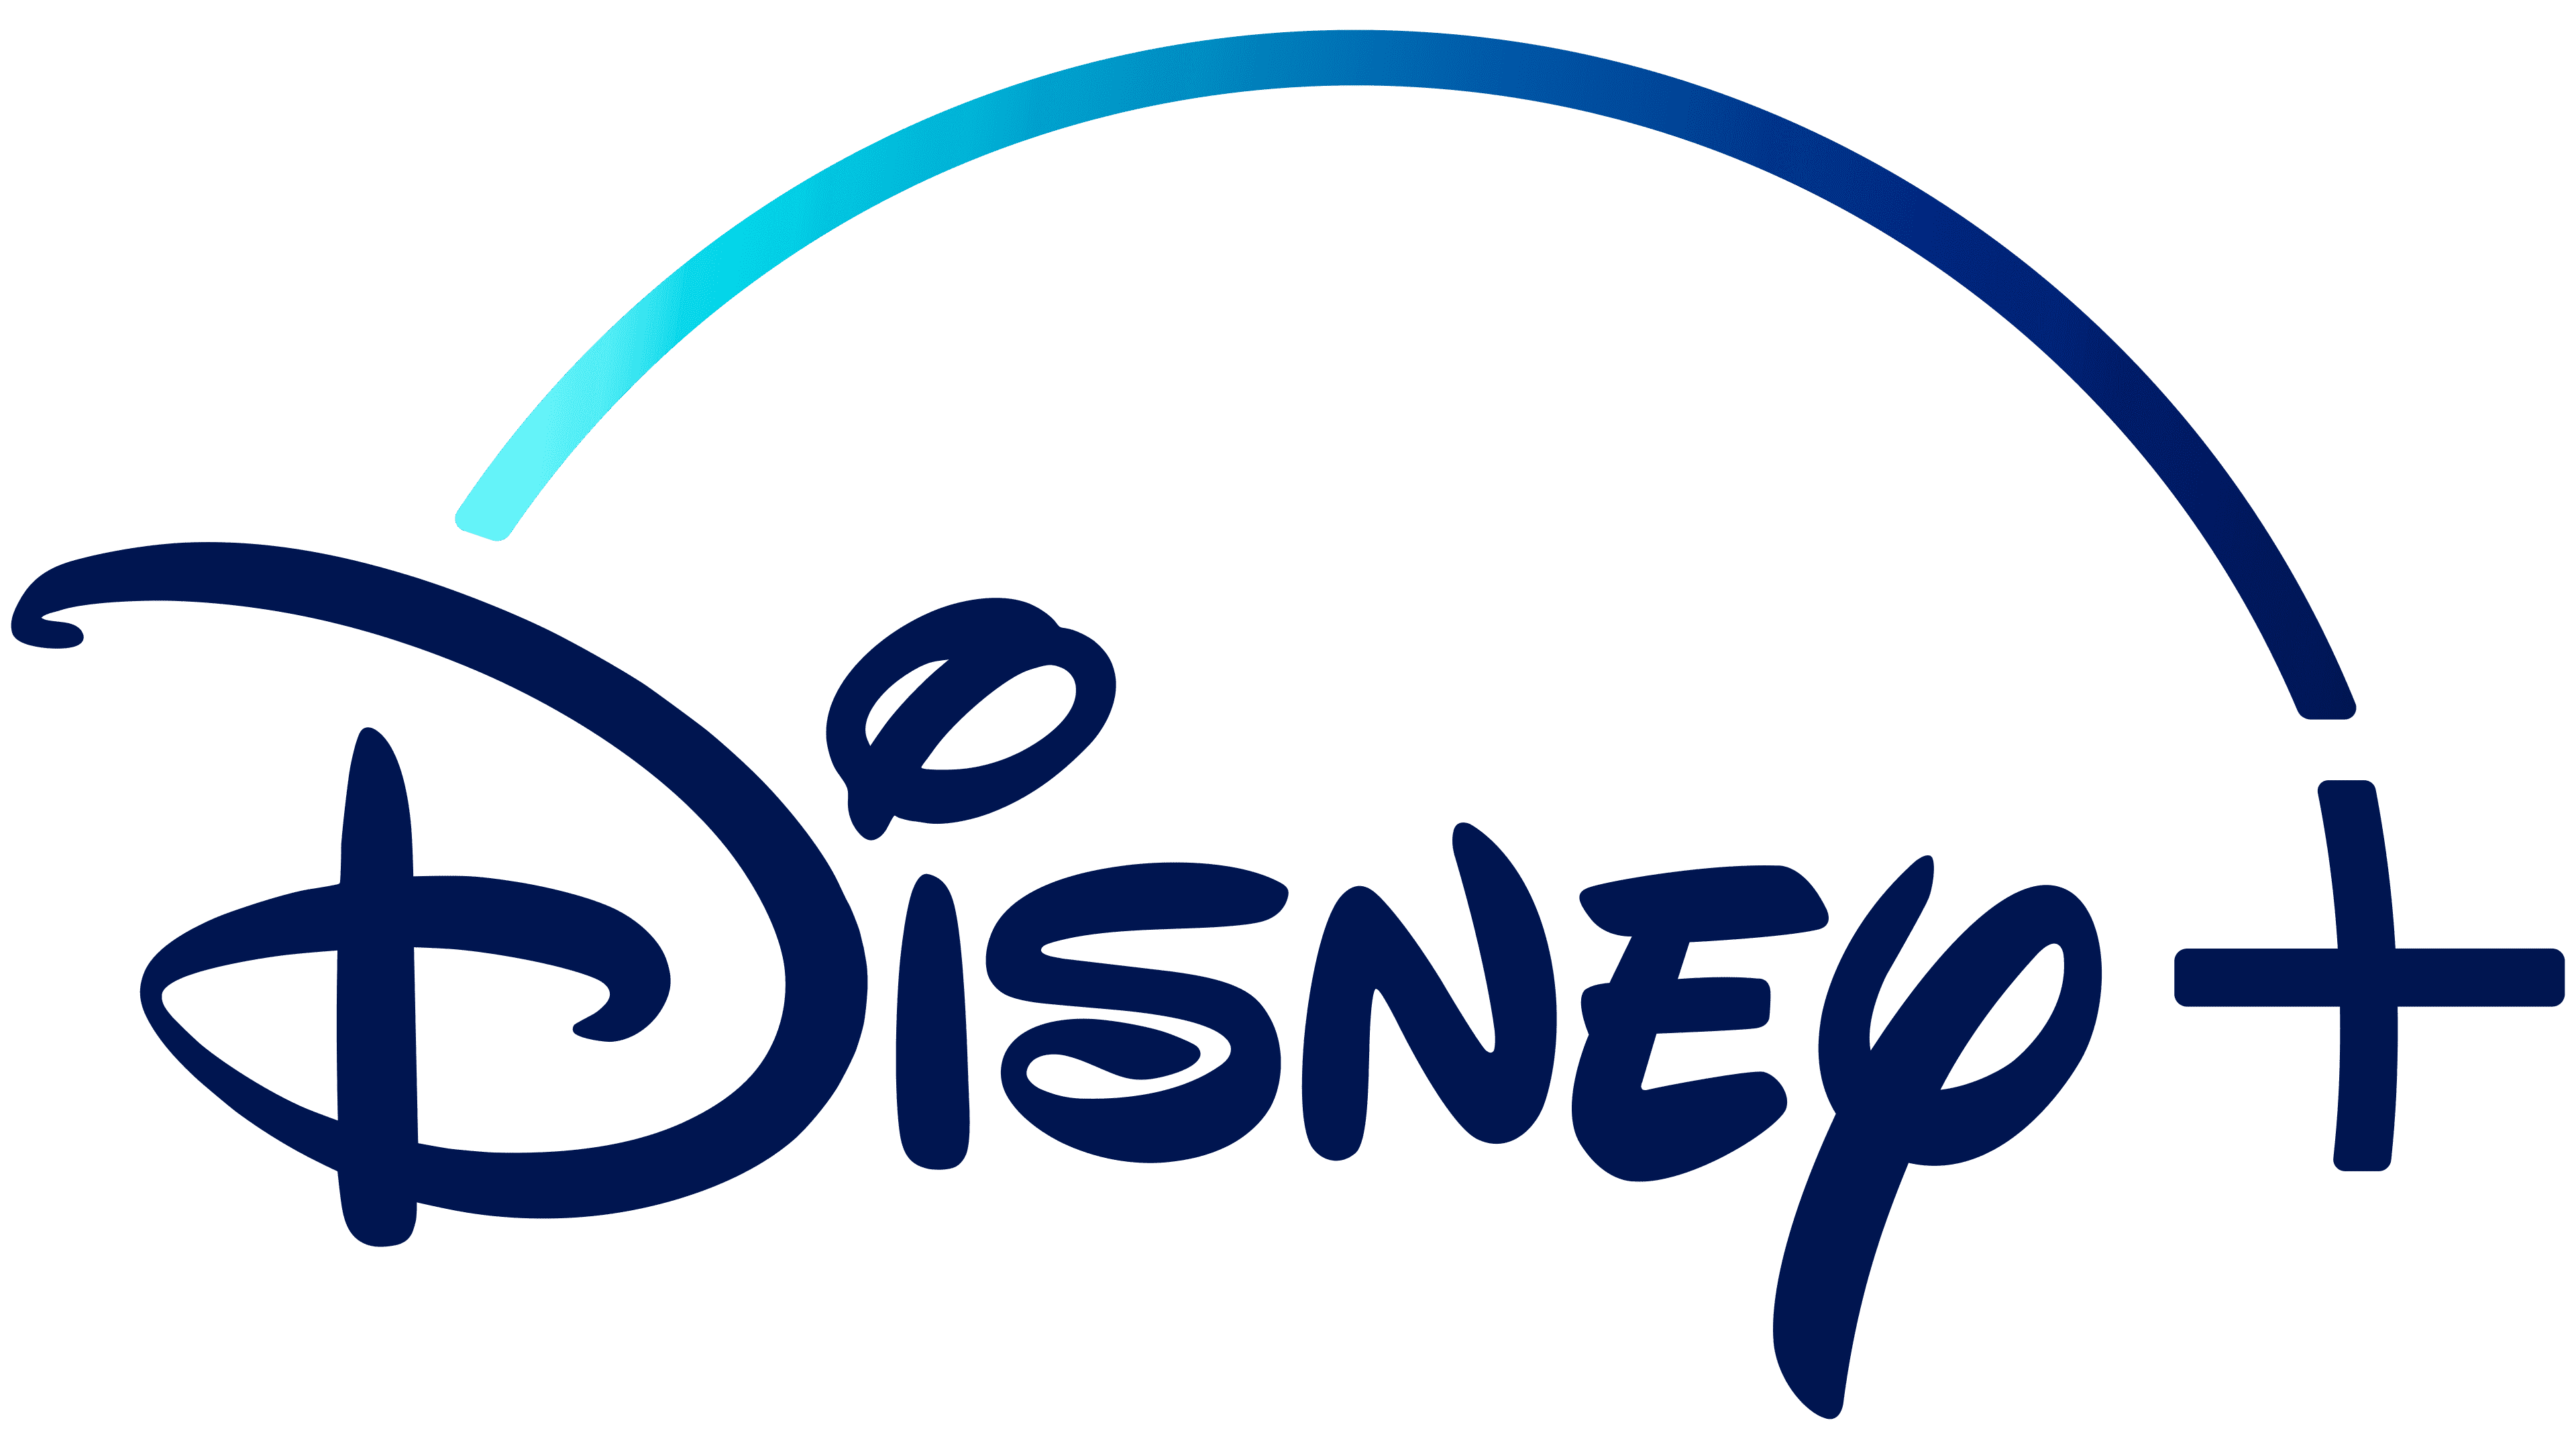 Disney Plus Logo PNG Pic